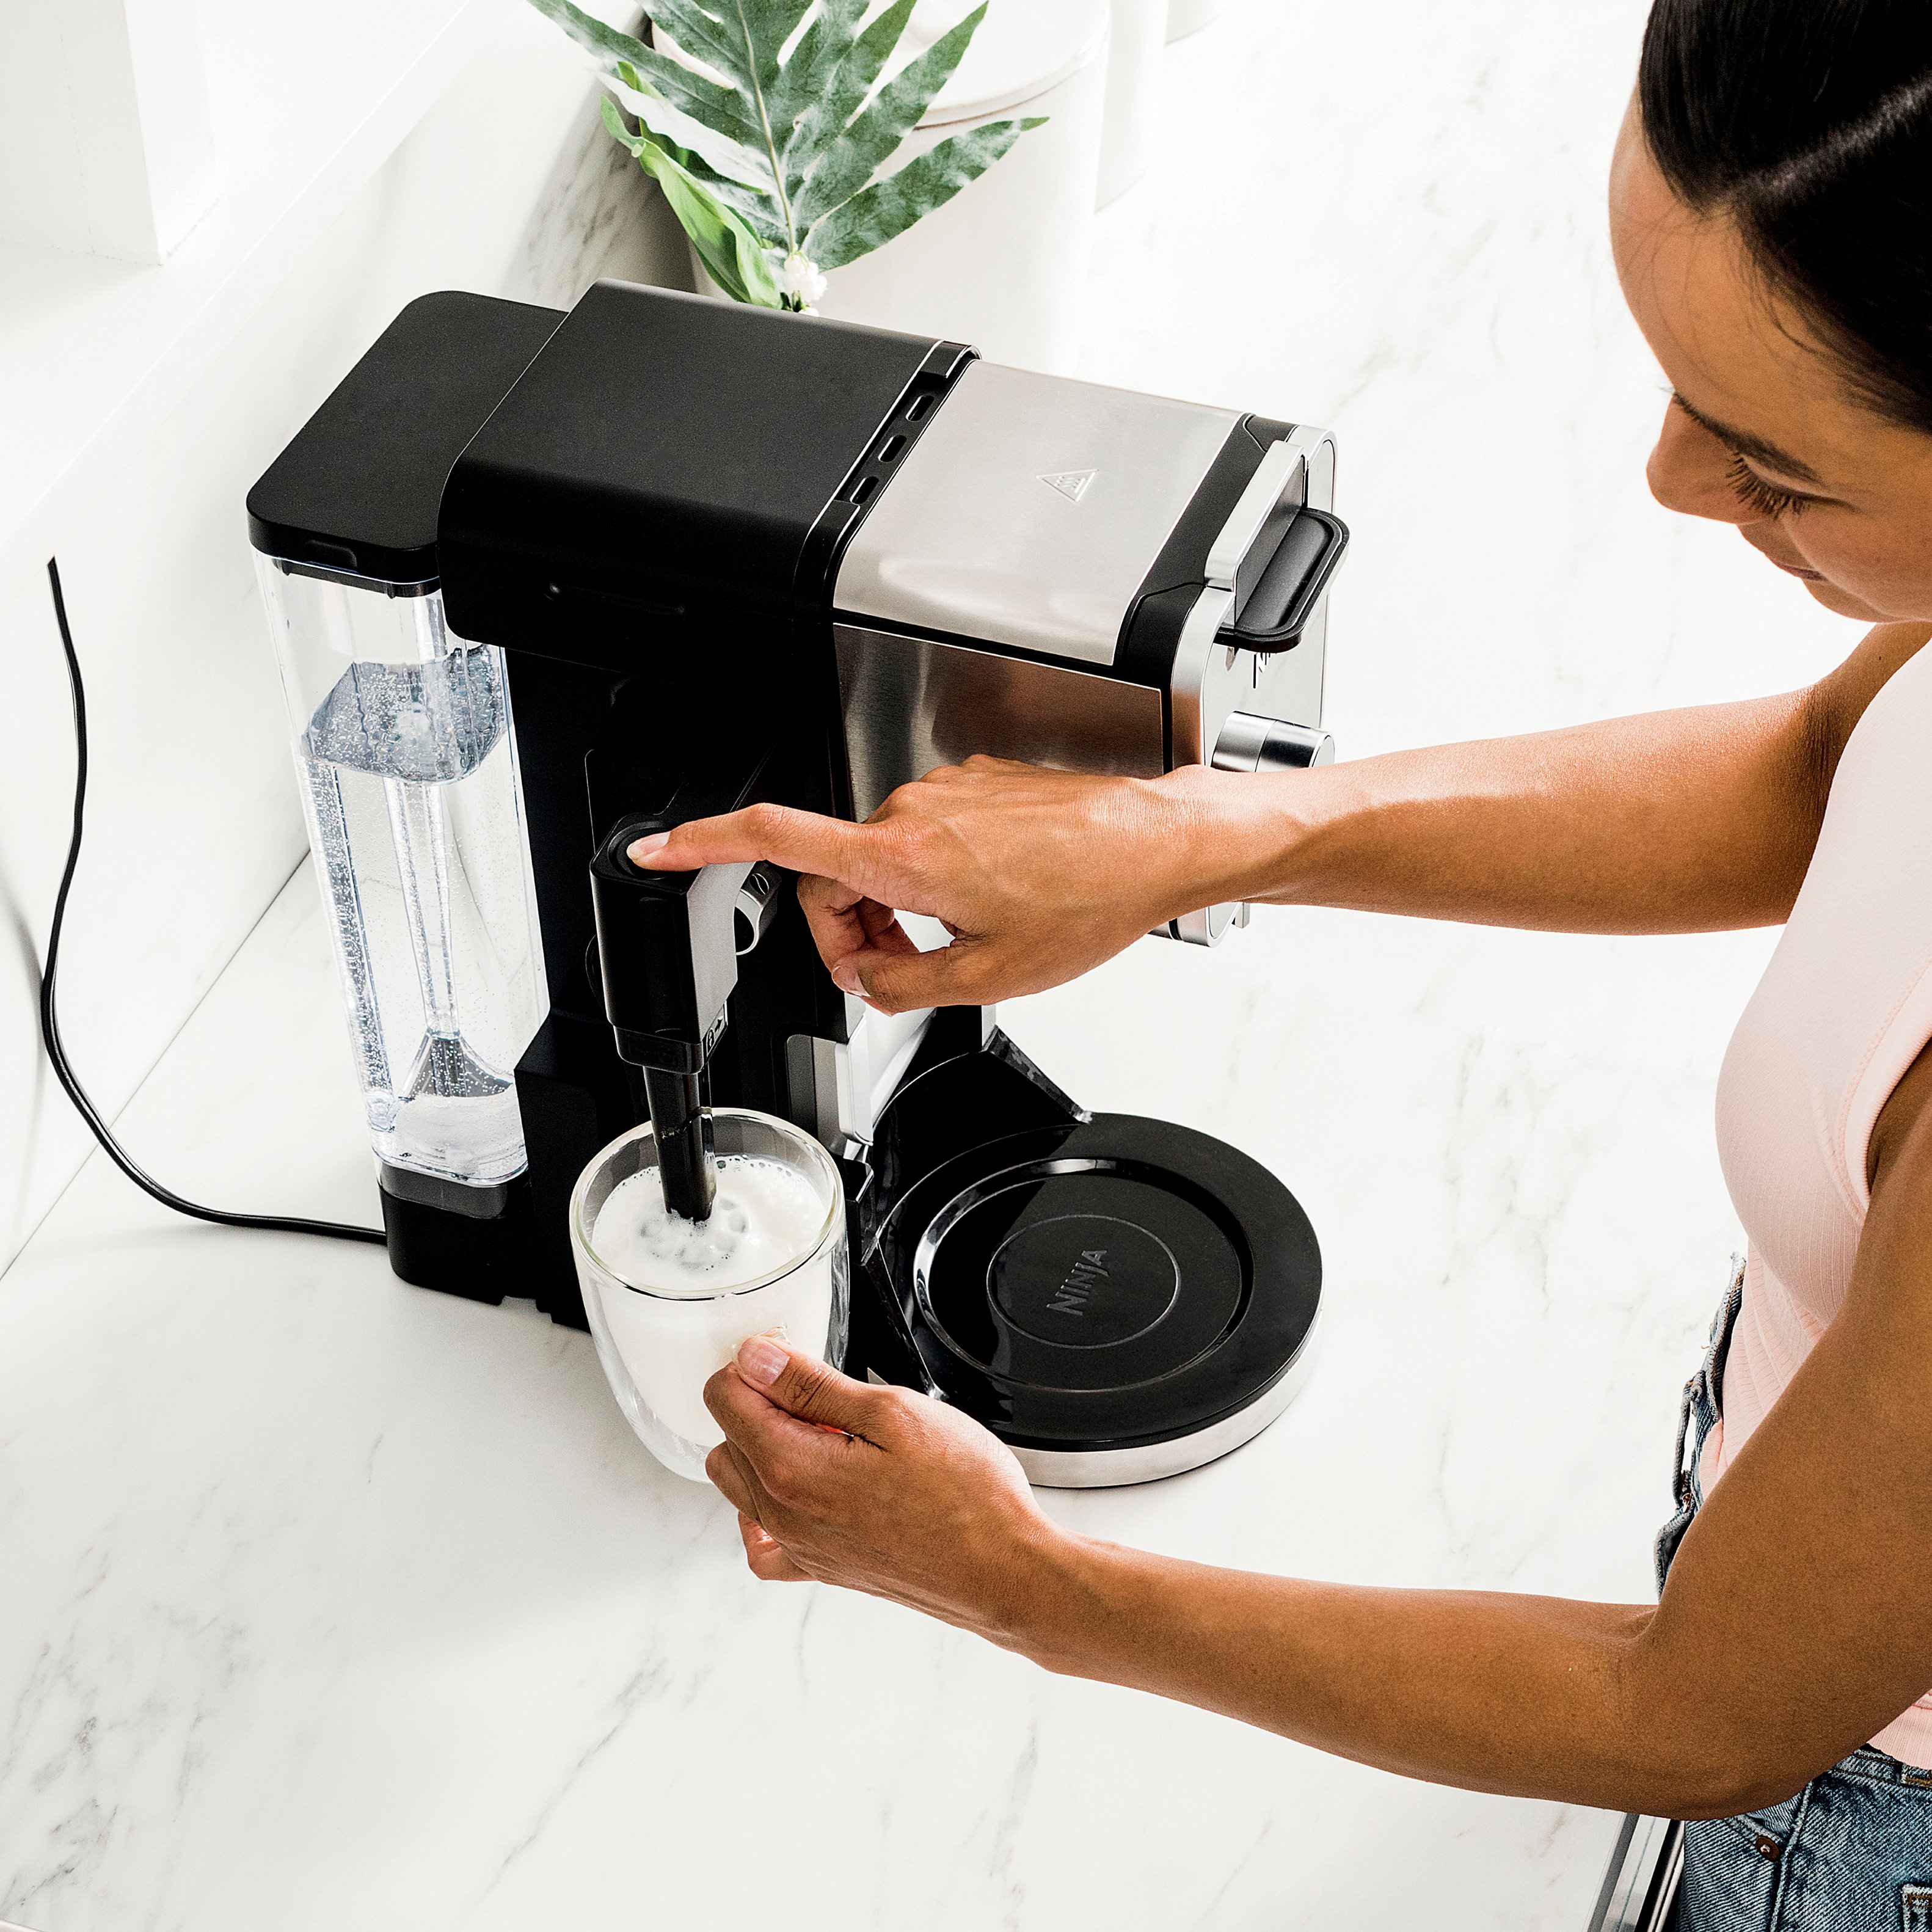 Ninja Dual Brew Pro Specialty Coffee System, Single-Serve